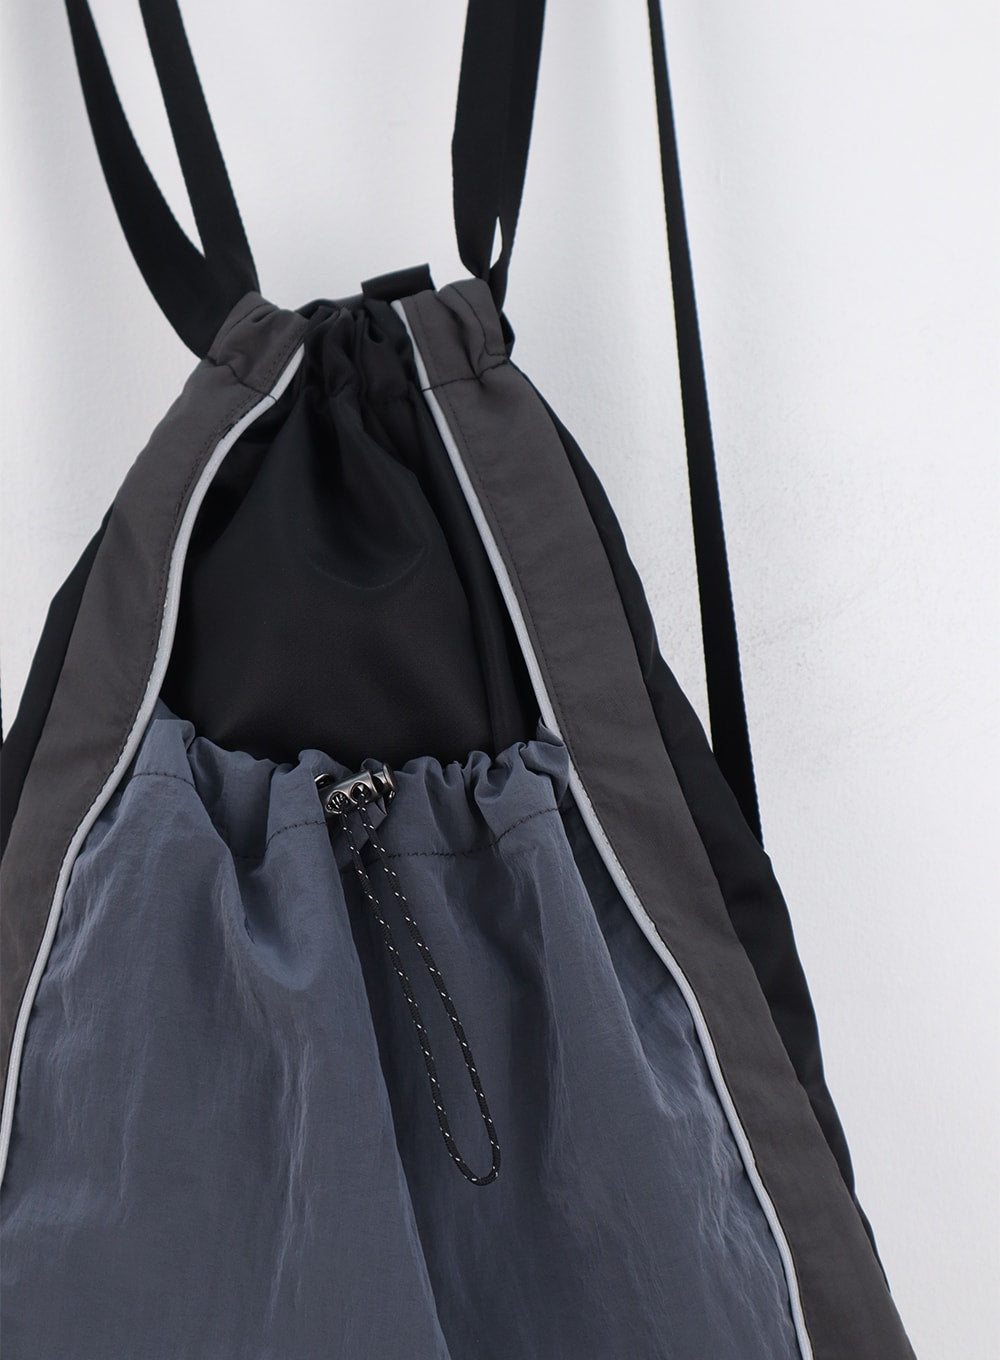 string-backpack-co304